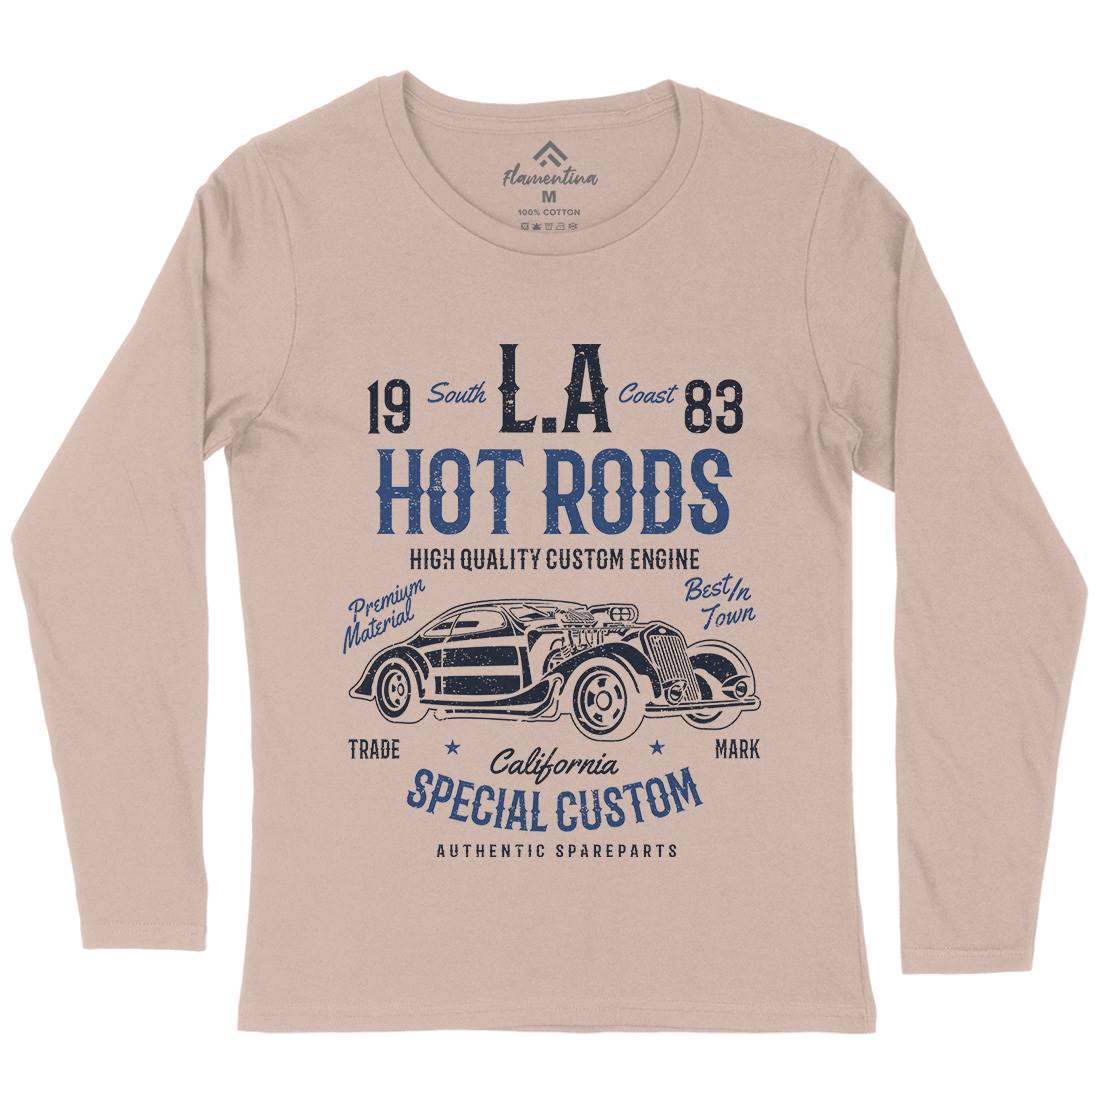 La Hot Rods Womens Long Sleeve T-Shirt Cars A079